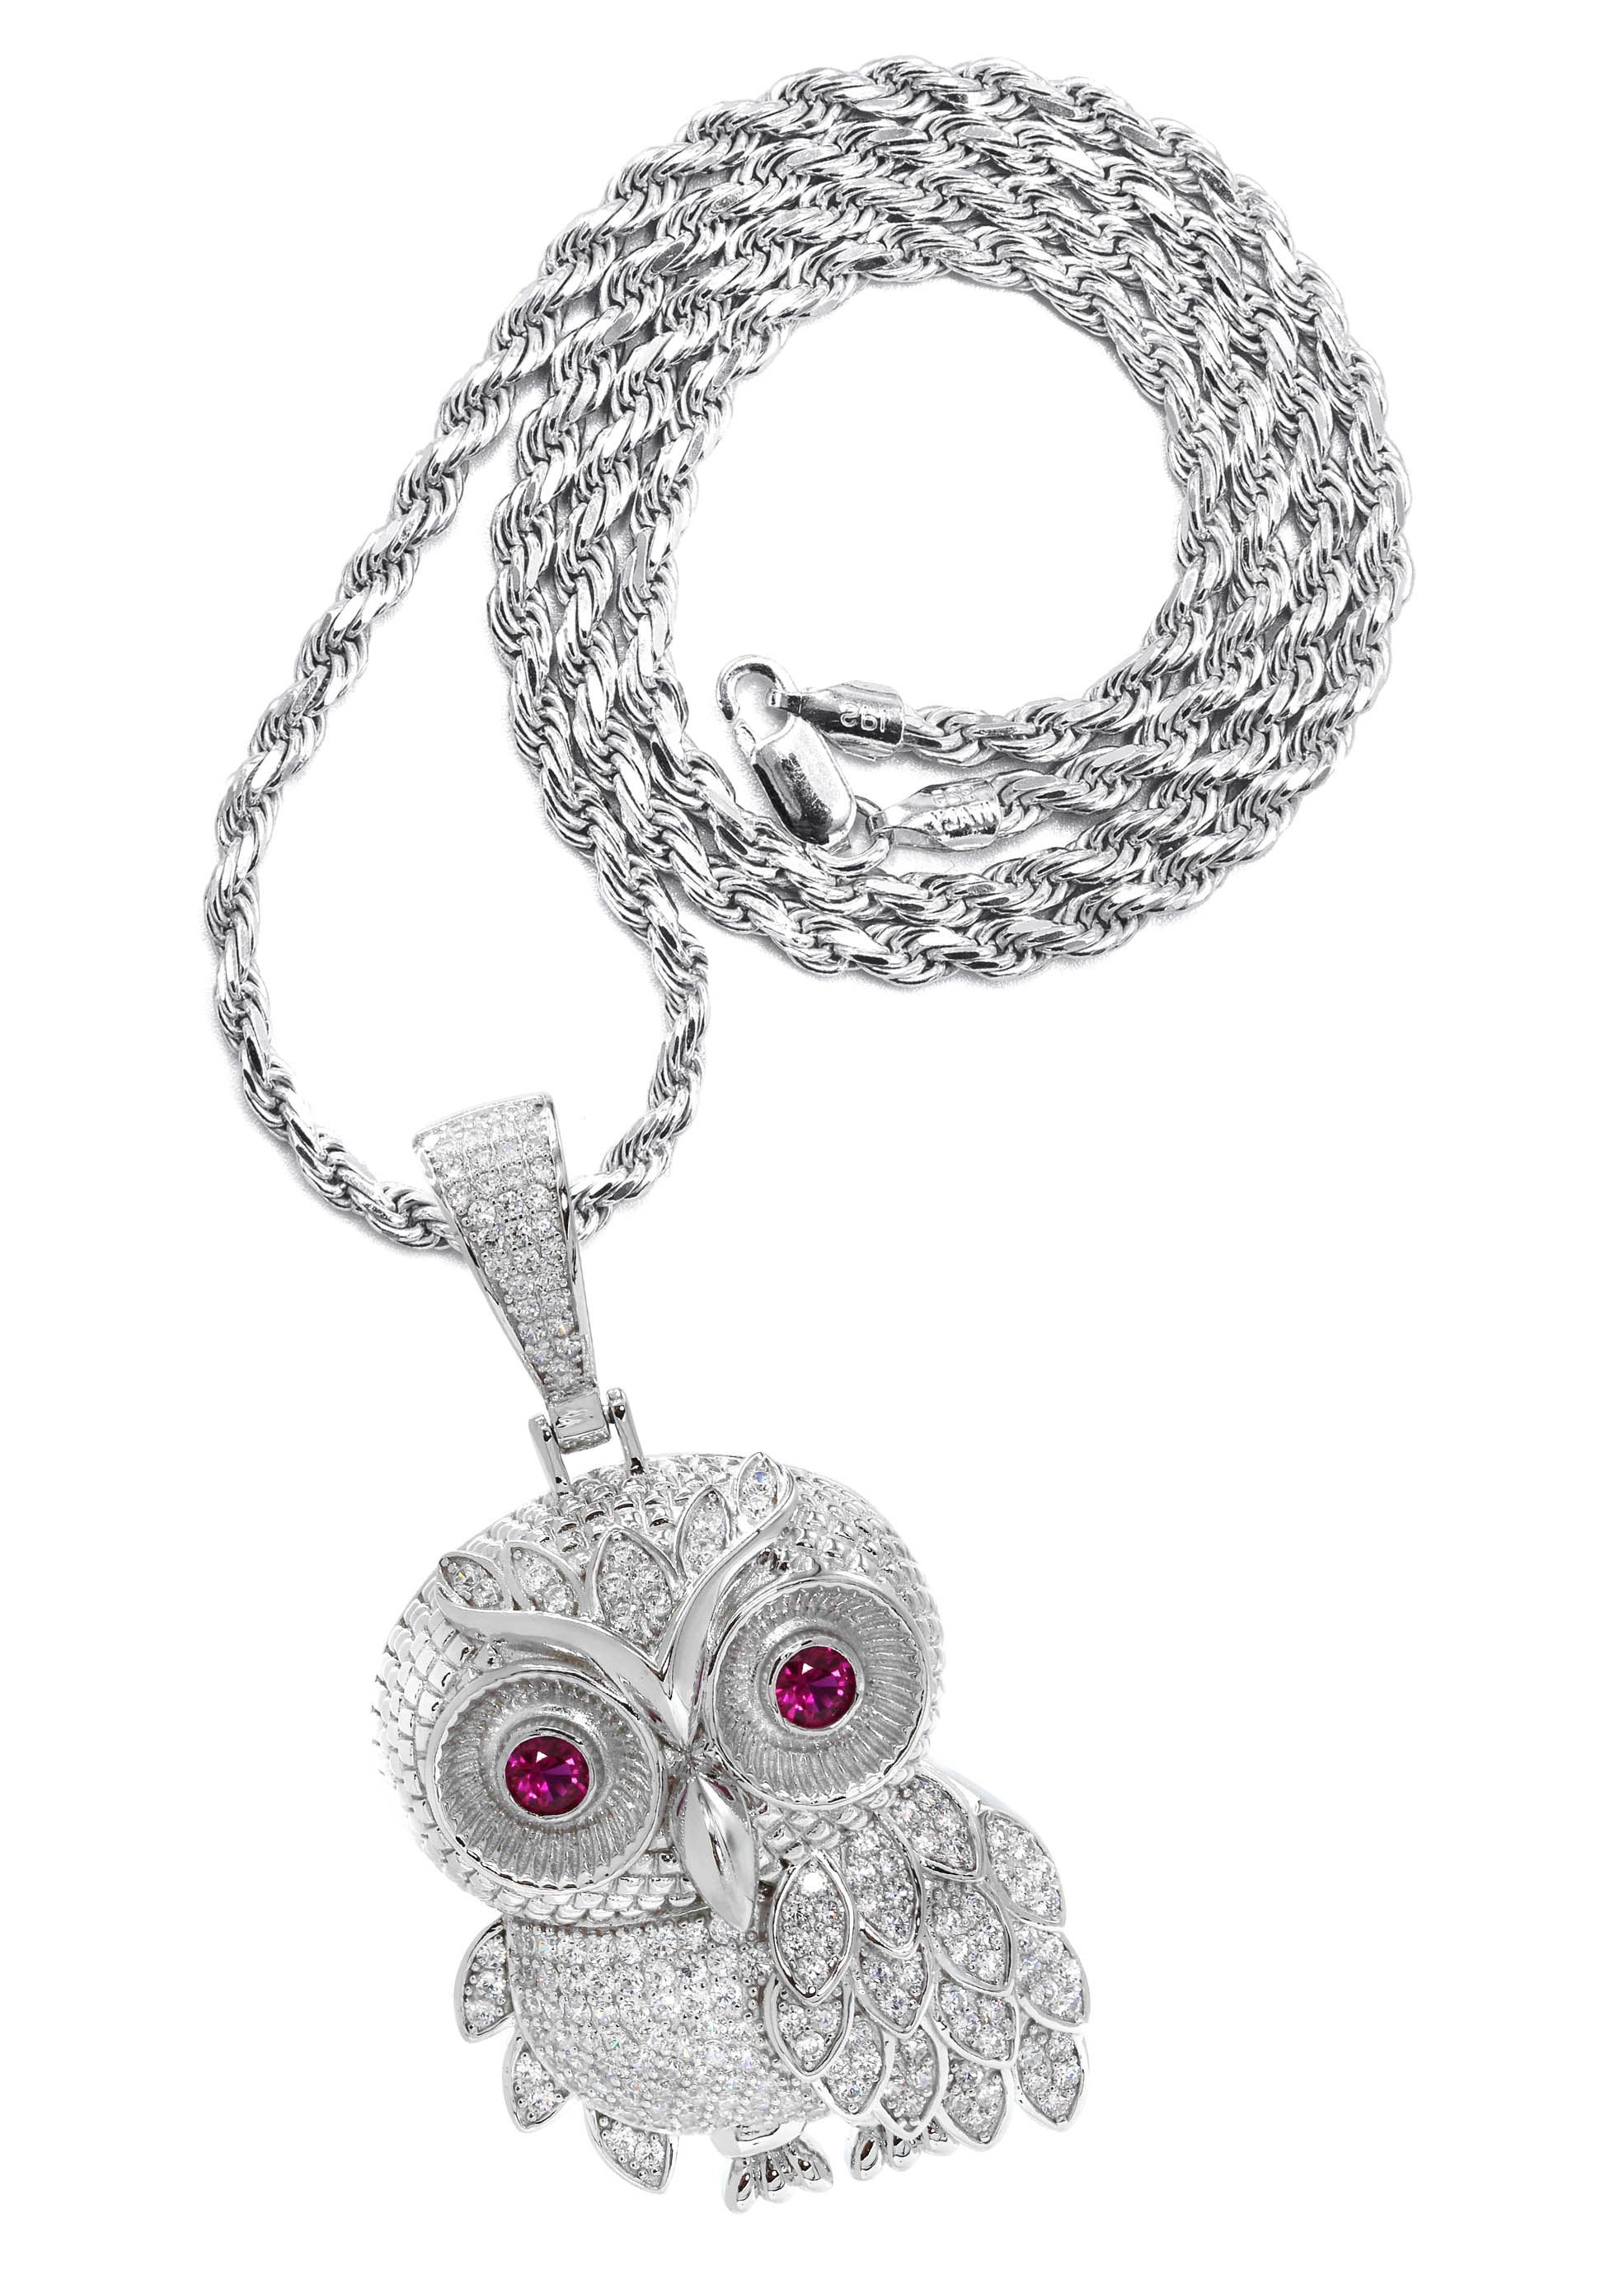 Silver Owl Necklace | 31 Grams